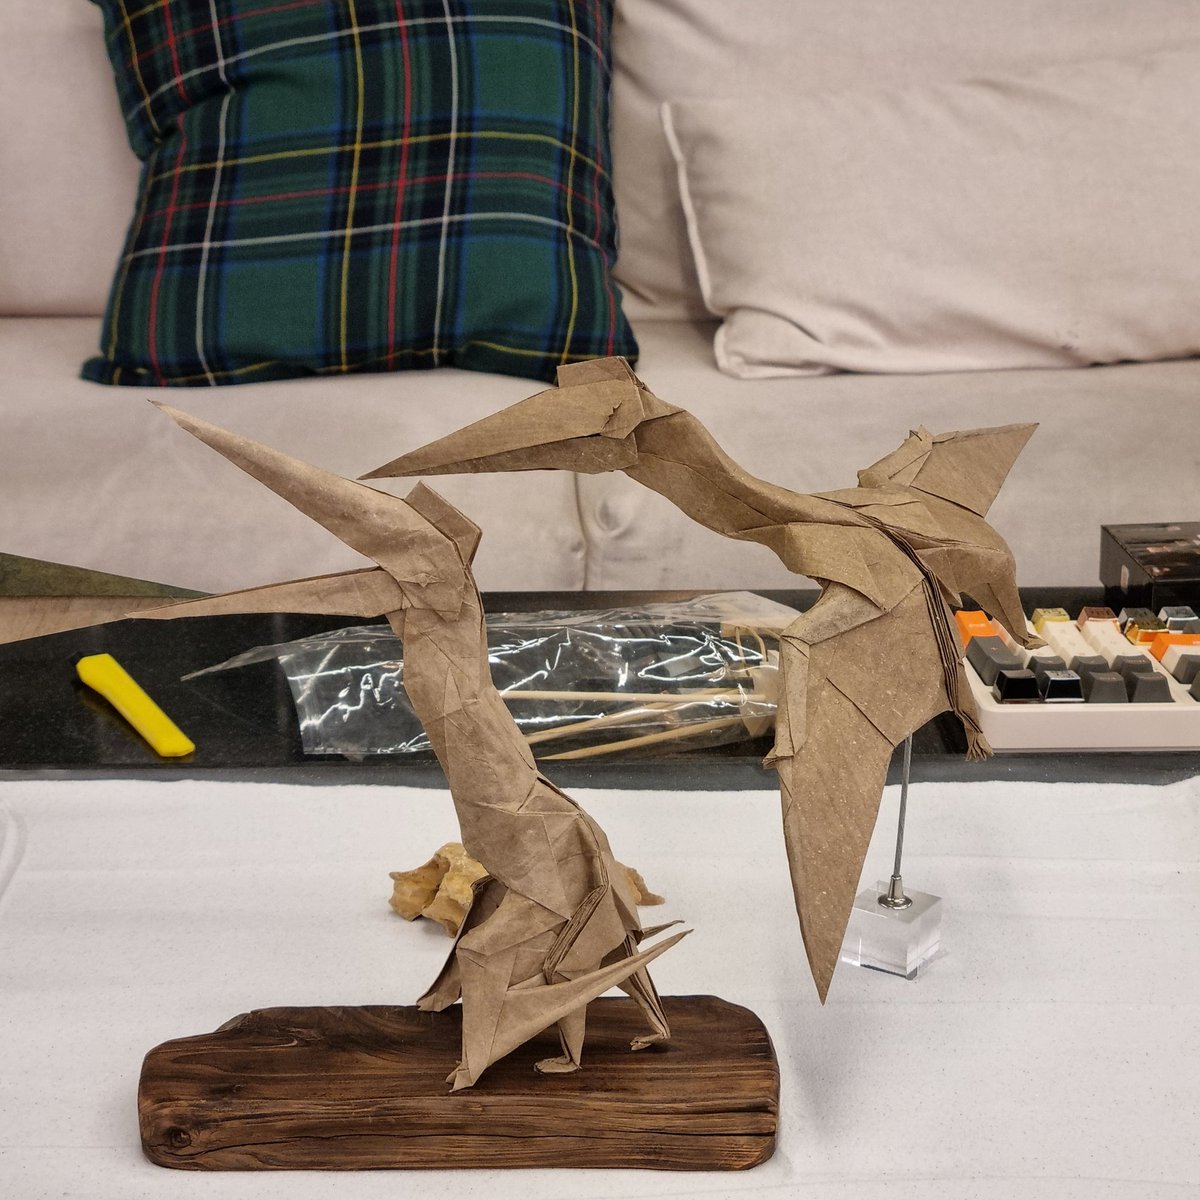 Hold my beer...

#origami #paleoart #pterosaur #azdarchid #50daysofpterosaurs